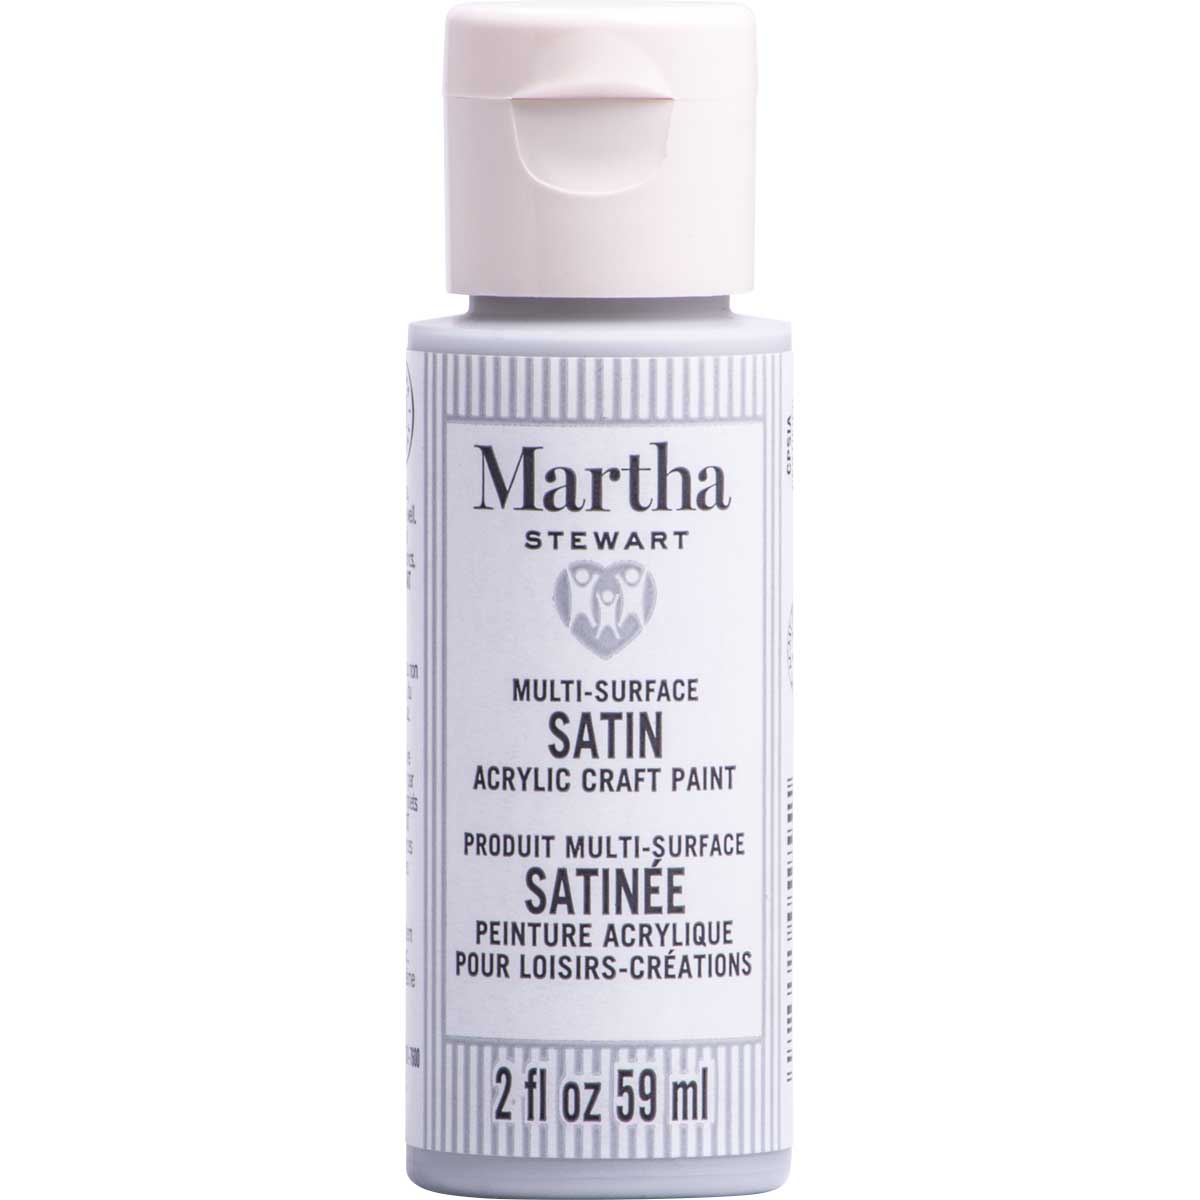 Martha Stewart ® Multi-Surface Satin Acrylic Craft Paint CPSIA - Dolphin Gray, 2 oz. - 5955